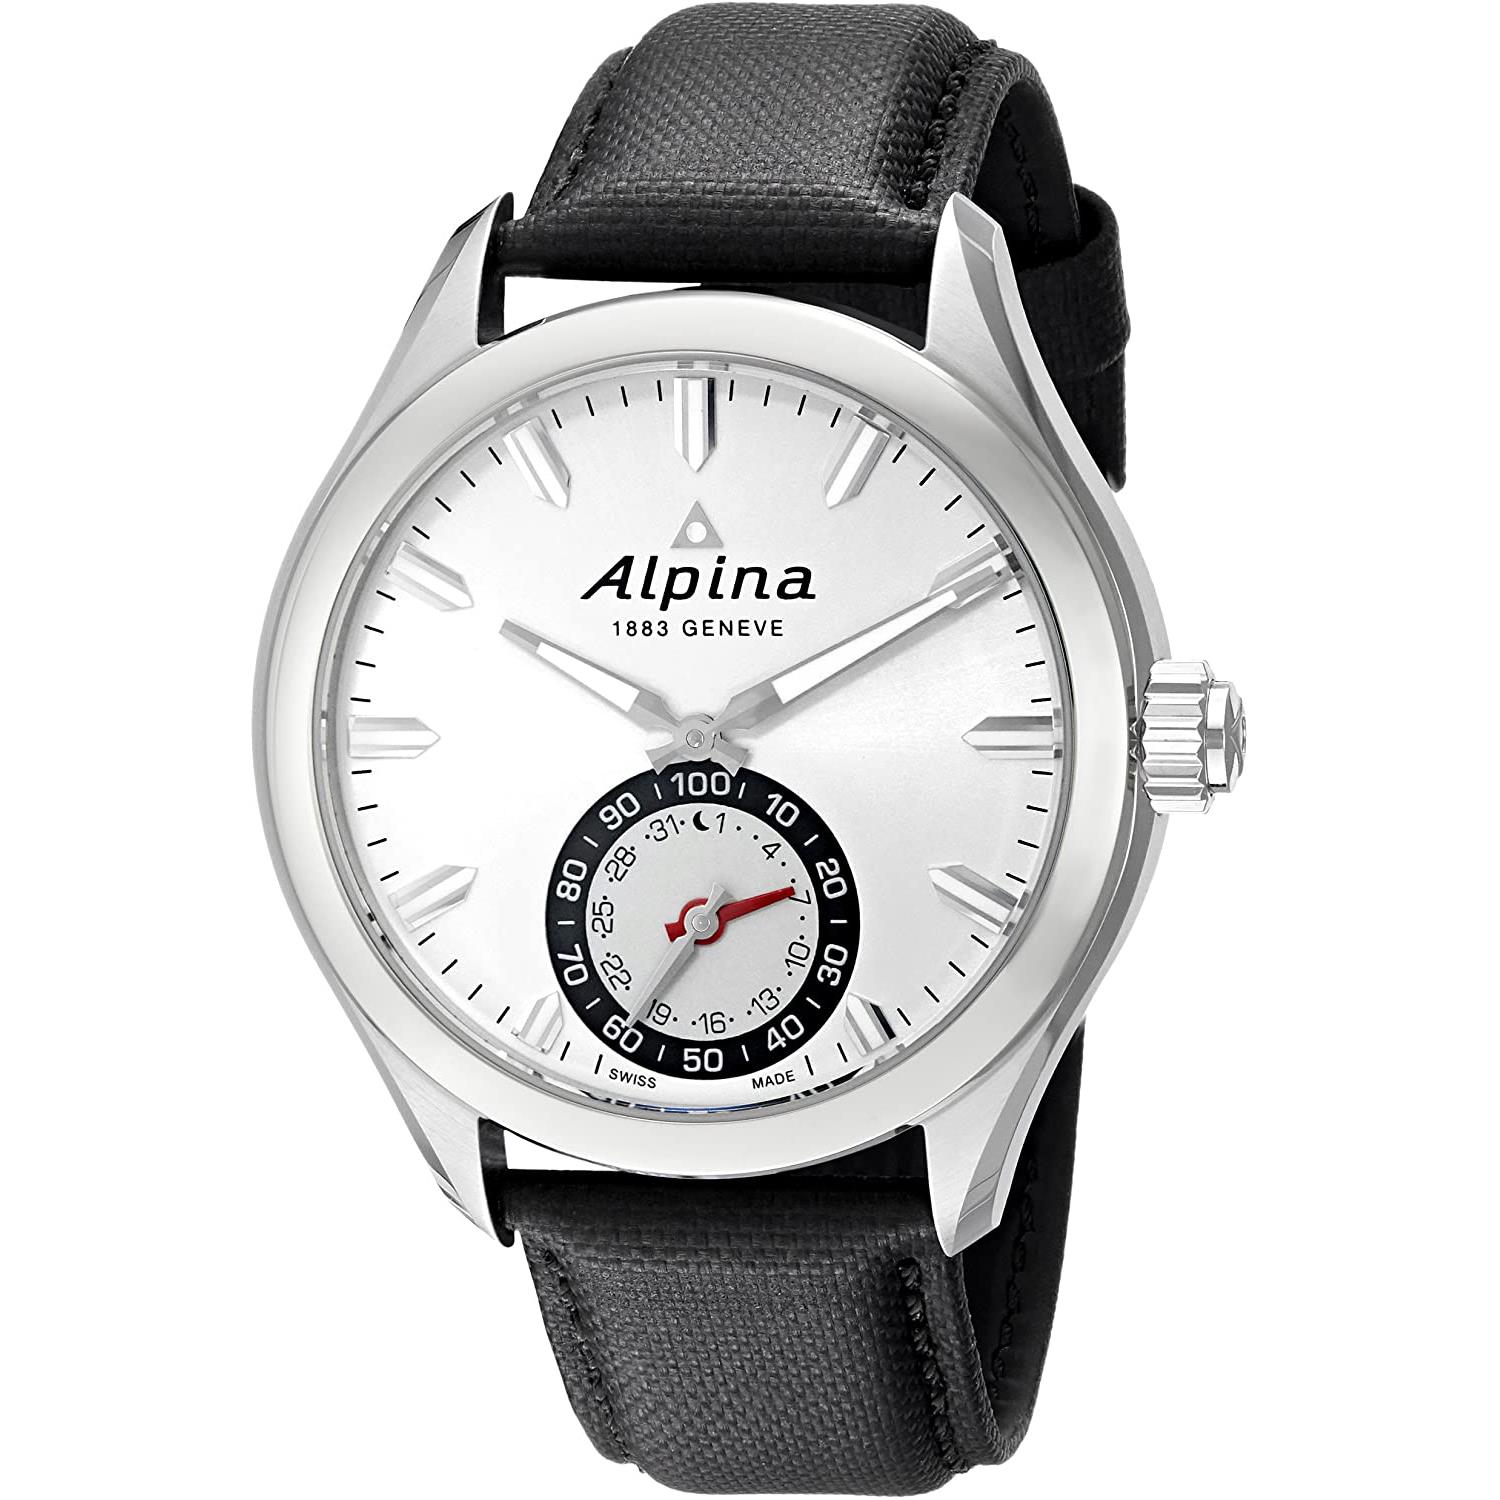 ساعت مچی آلپینا  ALPINA کد AL-285S5AQ6